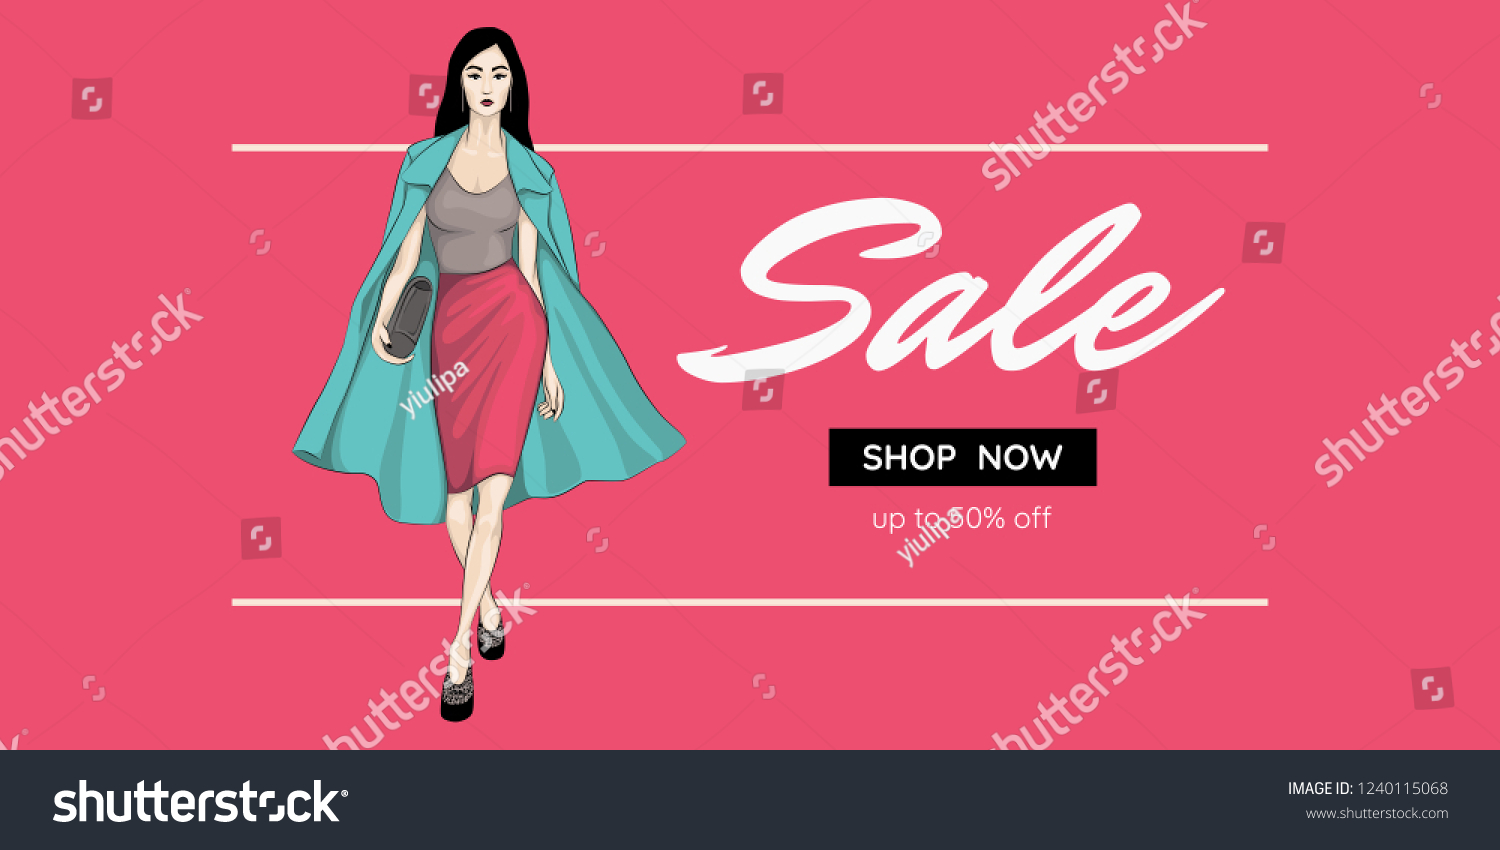 fashion sale online